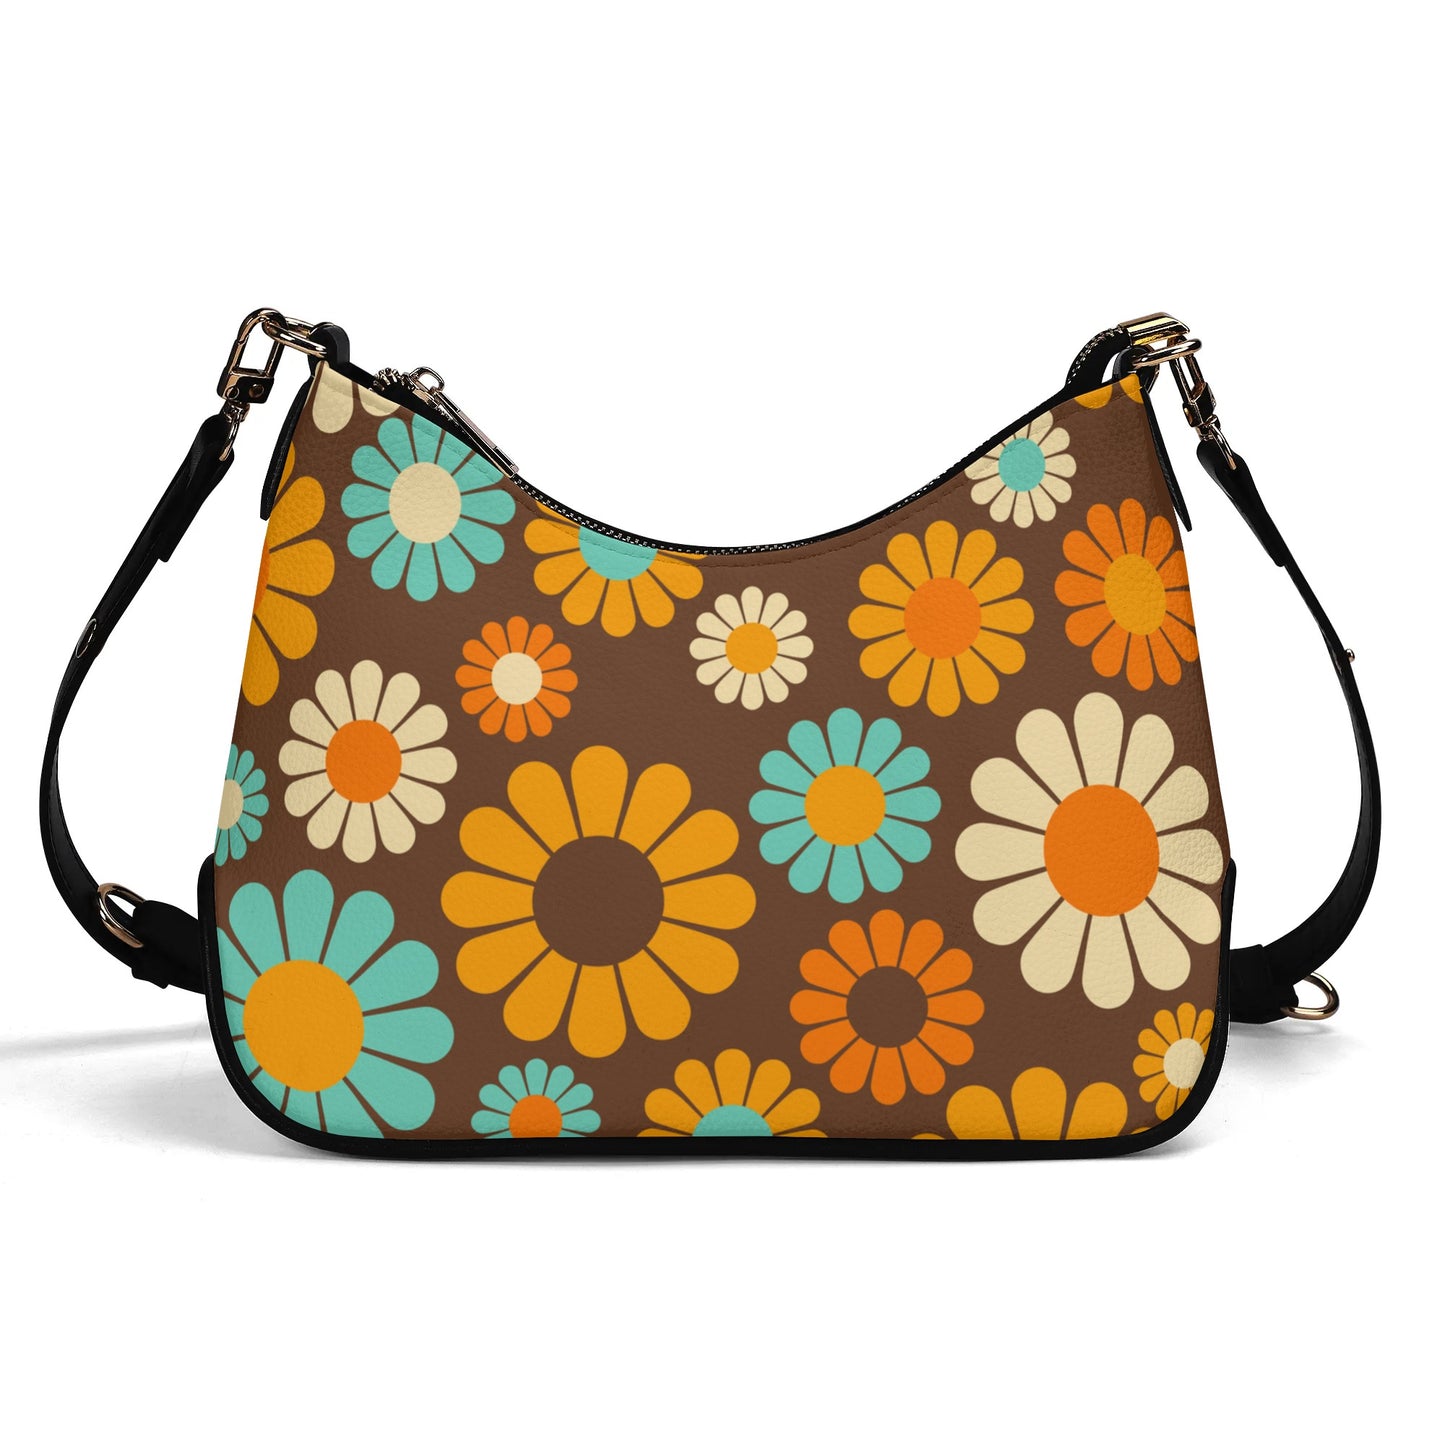 Vintage Handbag Style, Mod bag, PU leather Bag, Retro handbag, Brown Floral Handbag, 60s 70s Floral Purse, 70s inspired Cross body Boho Bag